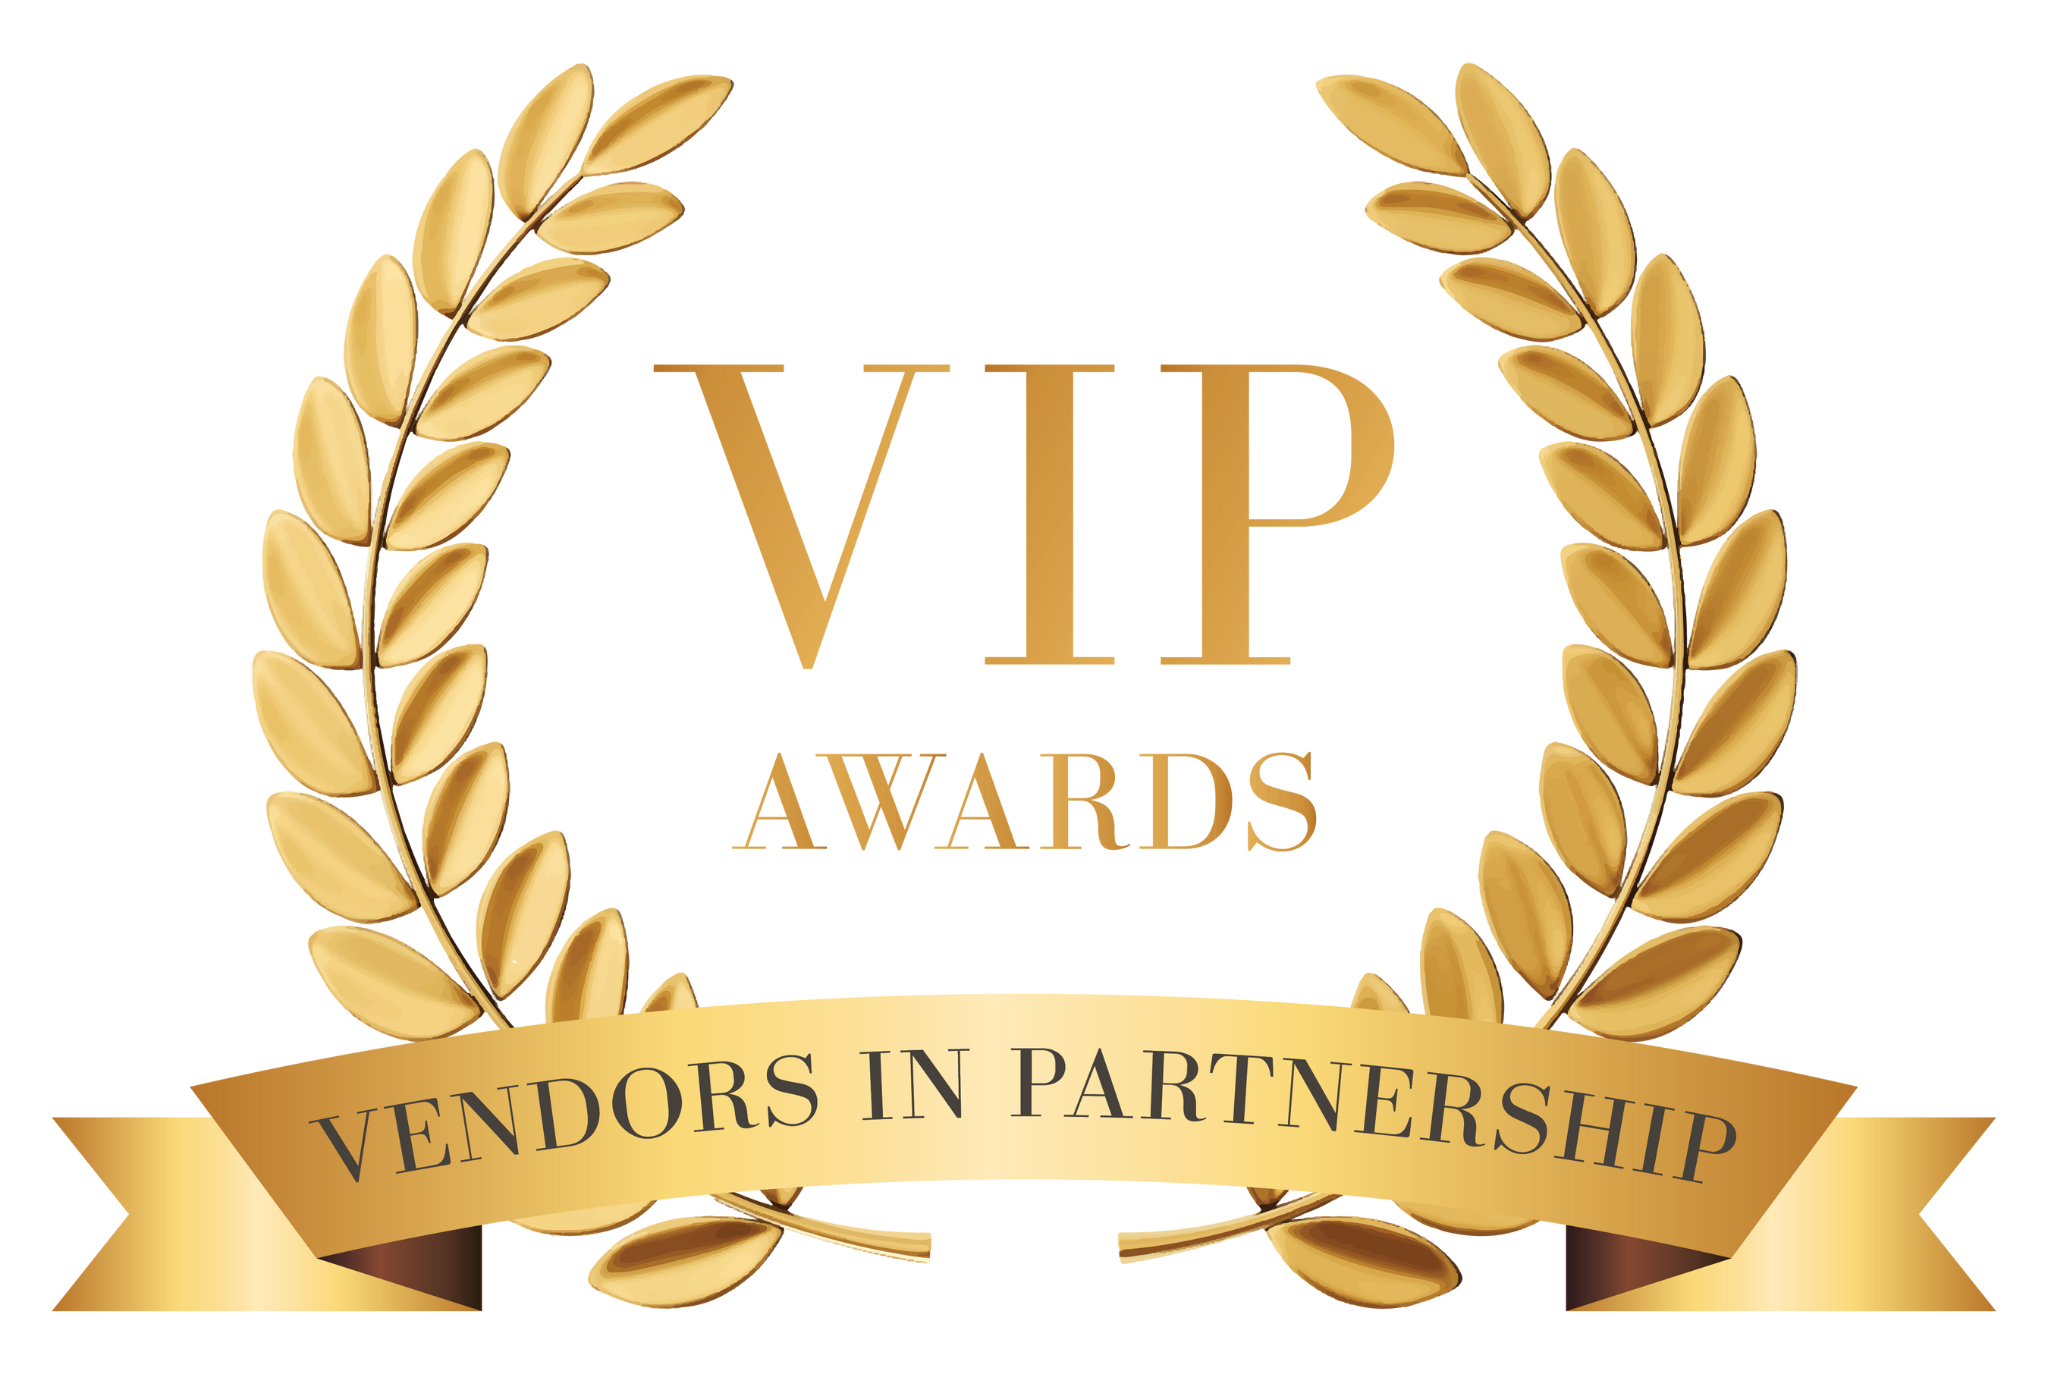 VIP Awards Vendors in Partnership